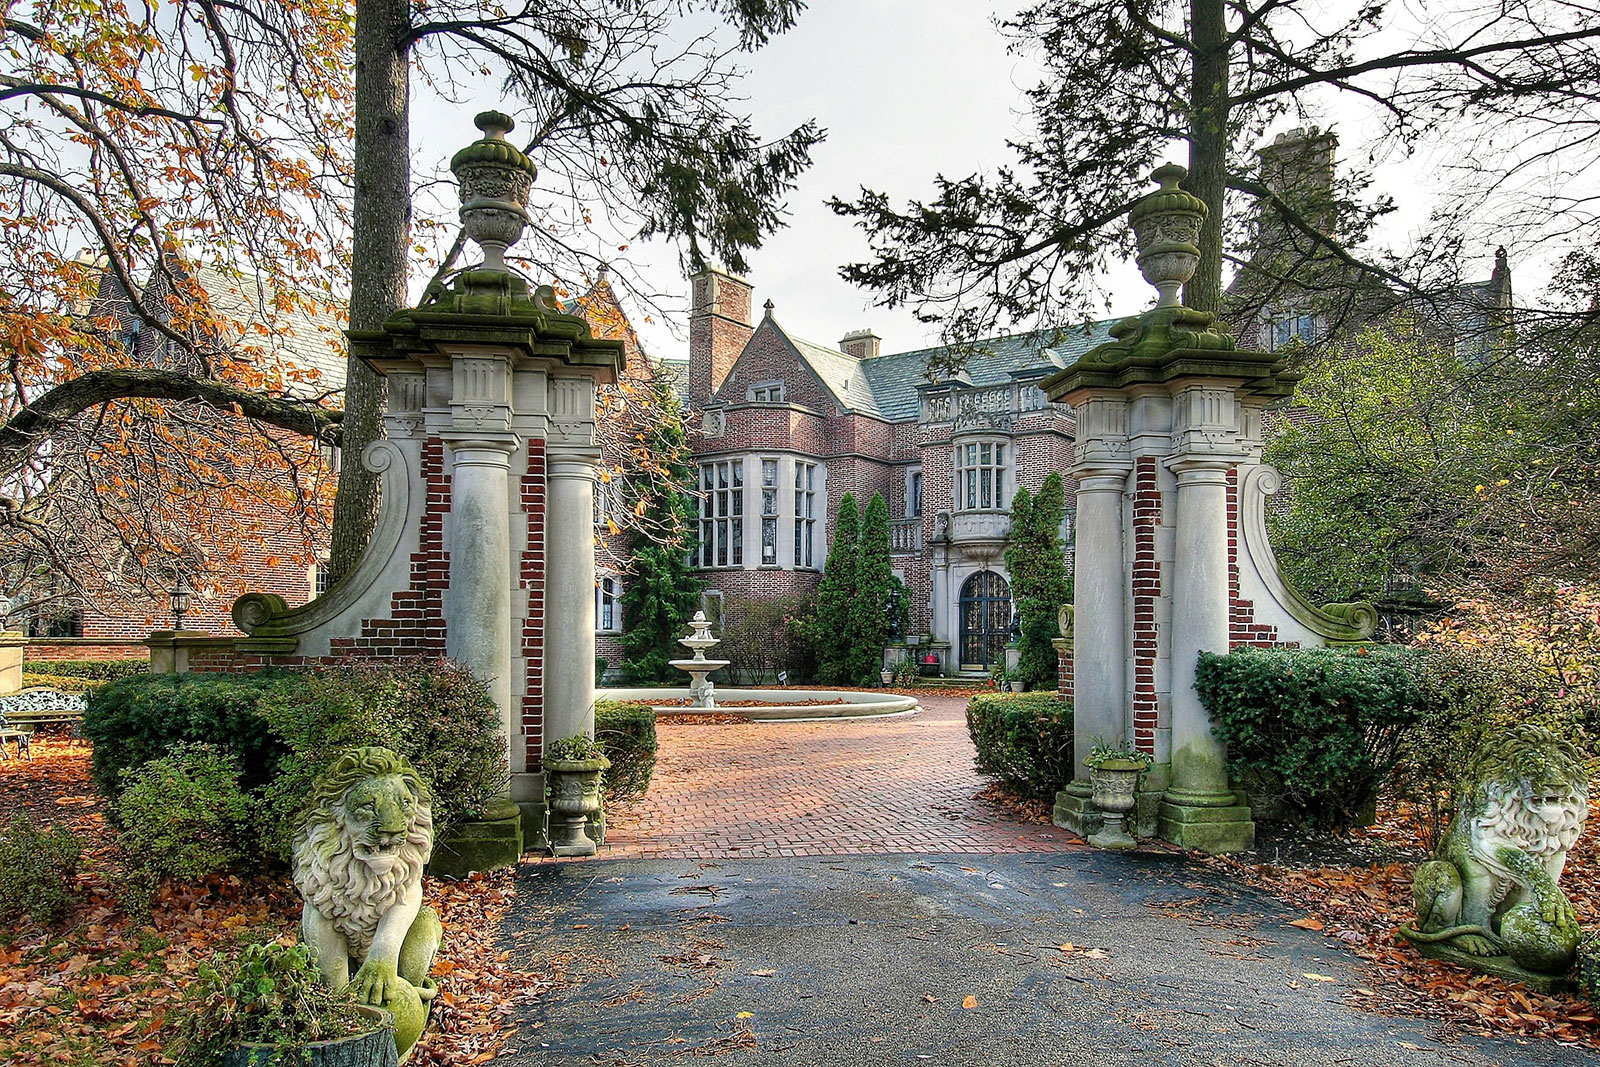 Vintage gate facing towards a mansion